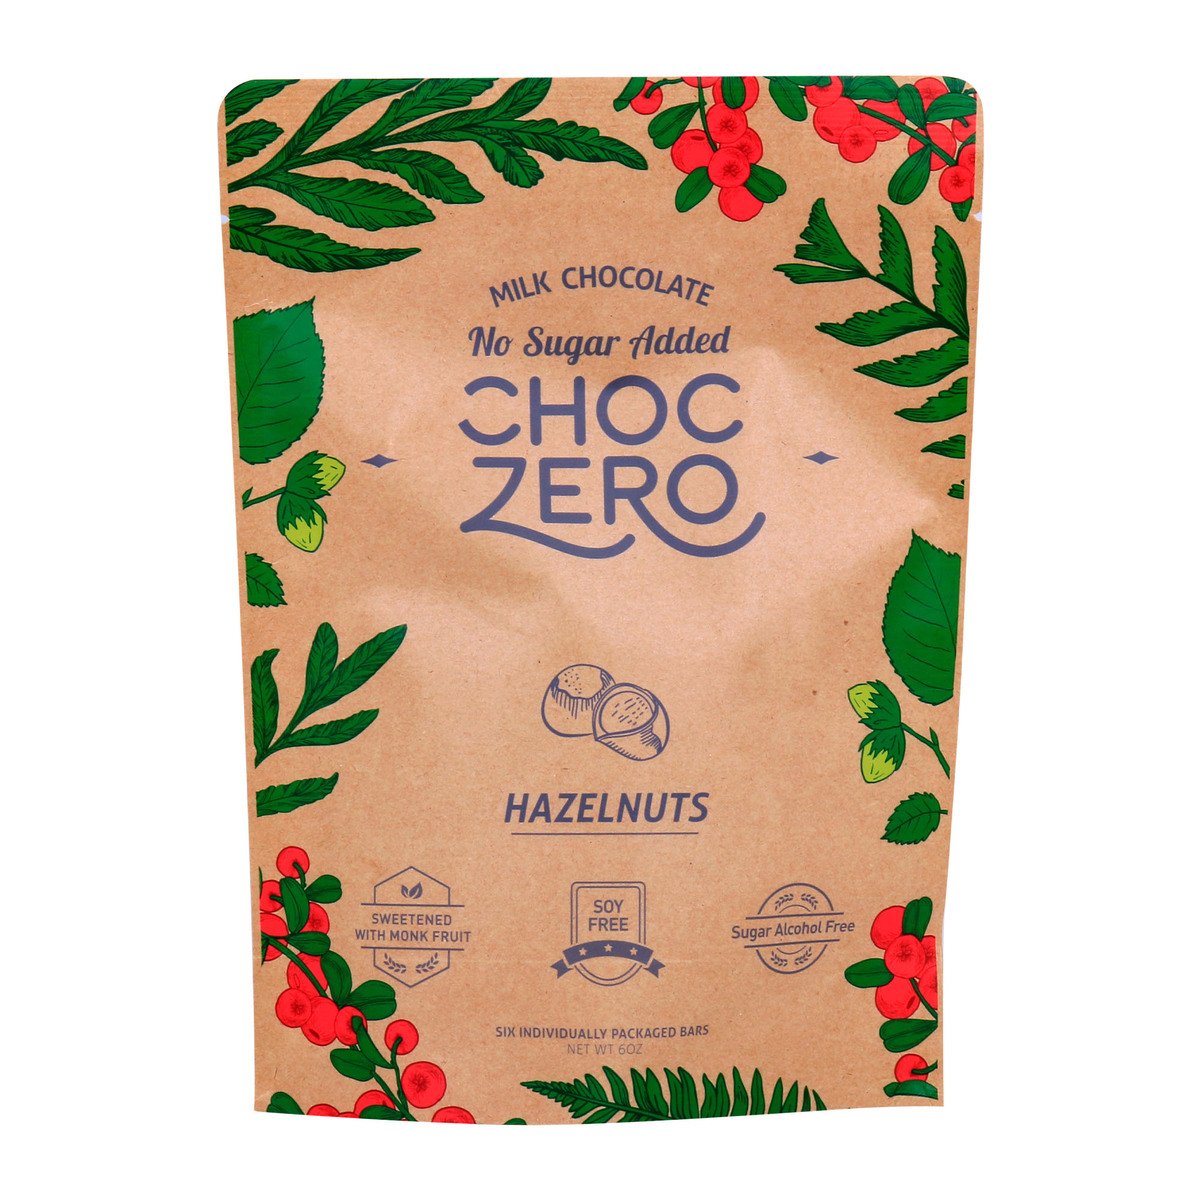 Choc Zero Milk Chocolate Hazelnuts 170g